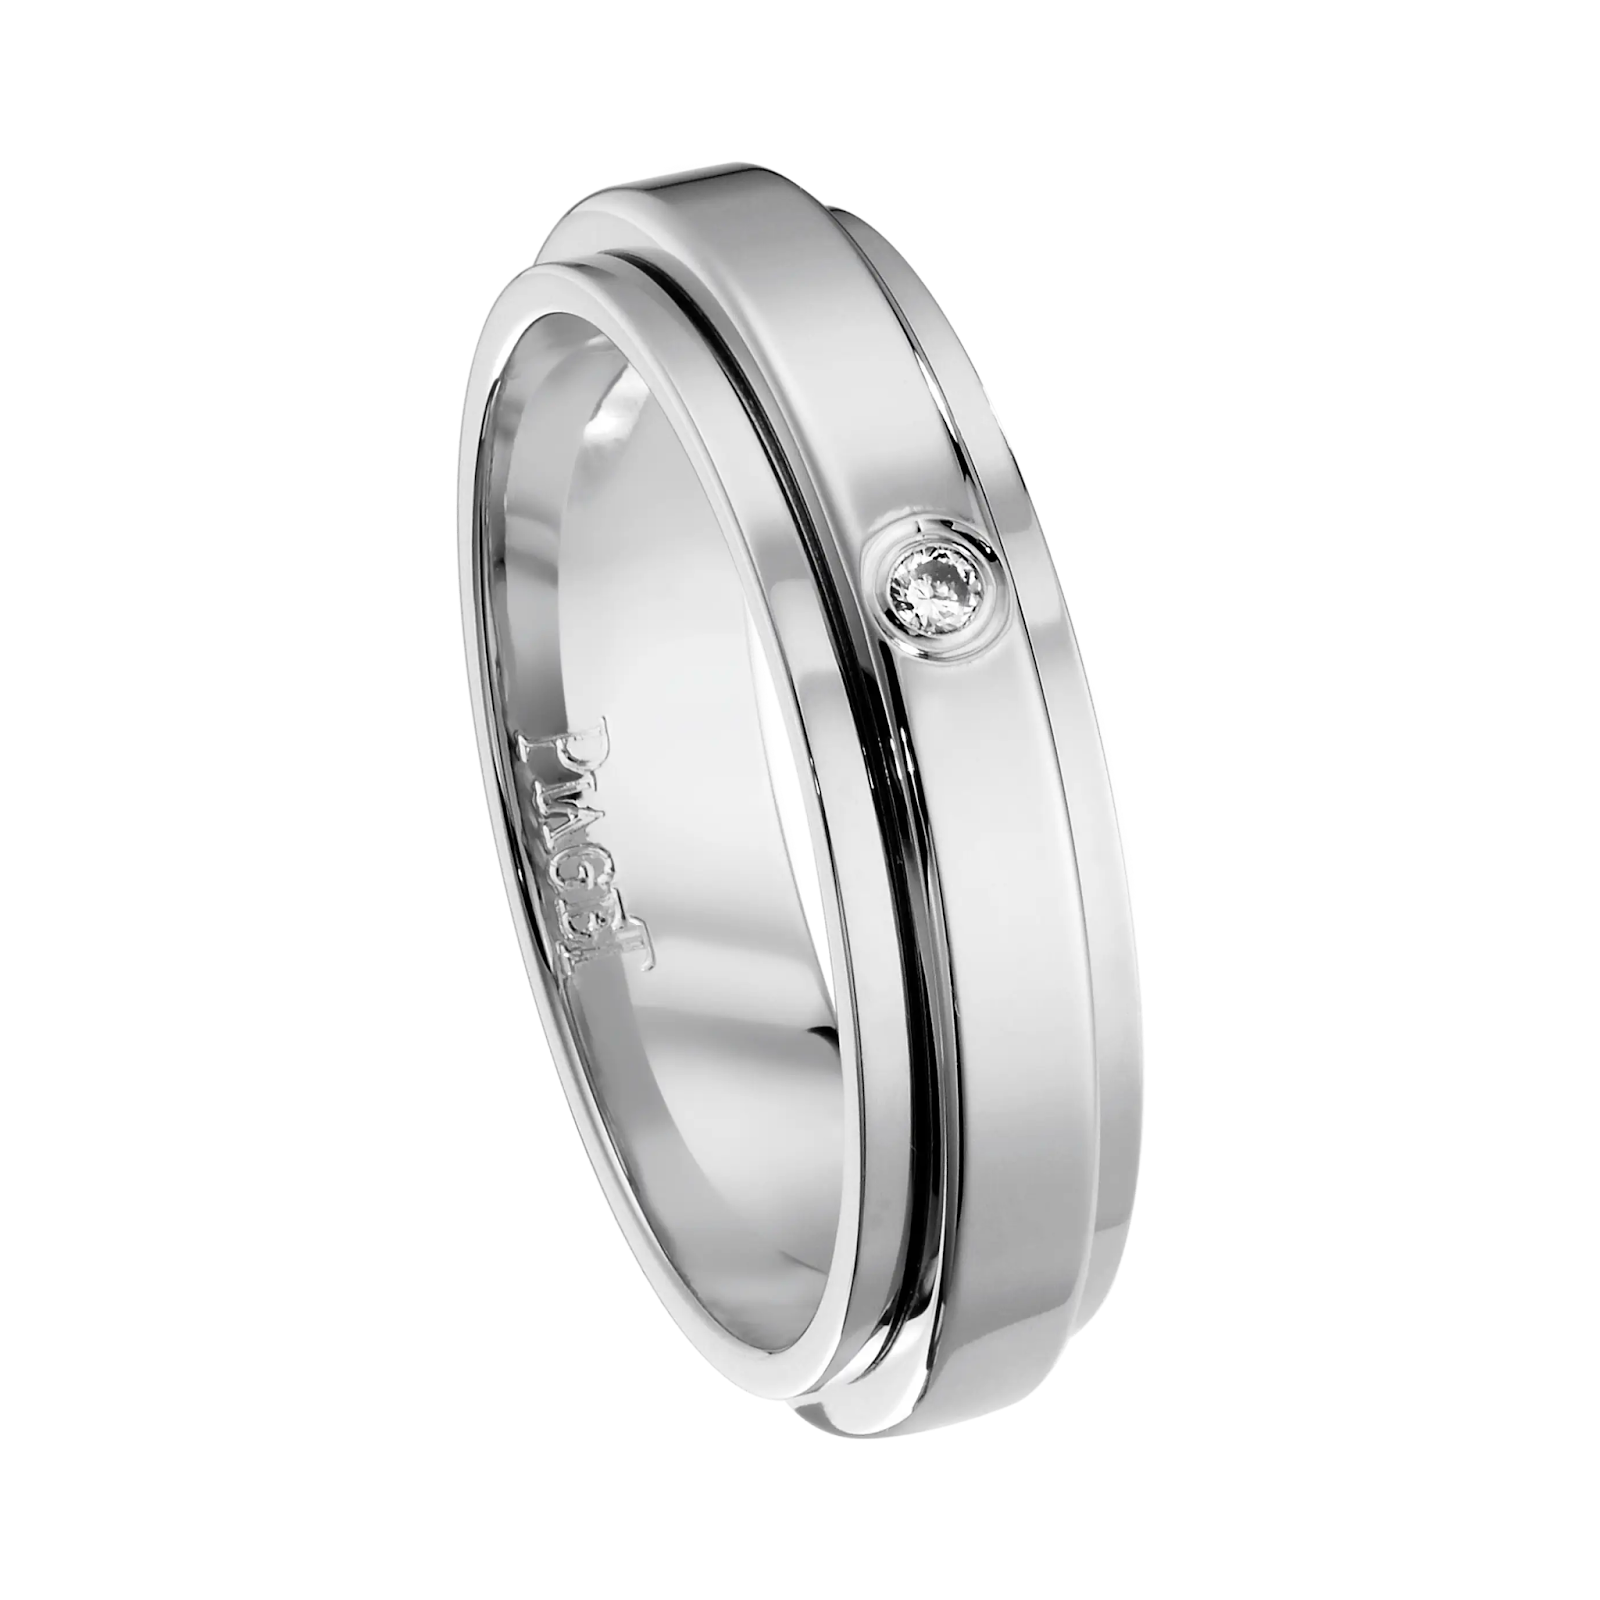 PIAGET（ピアジェ）の結婚指輪